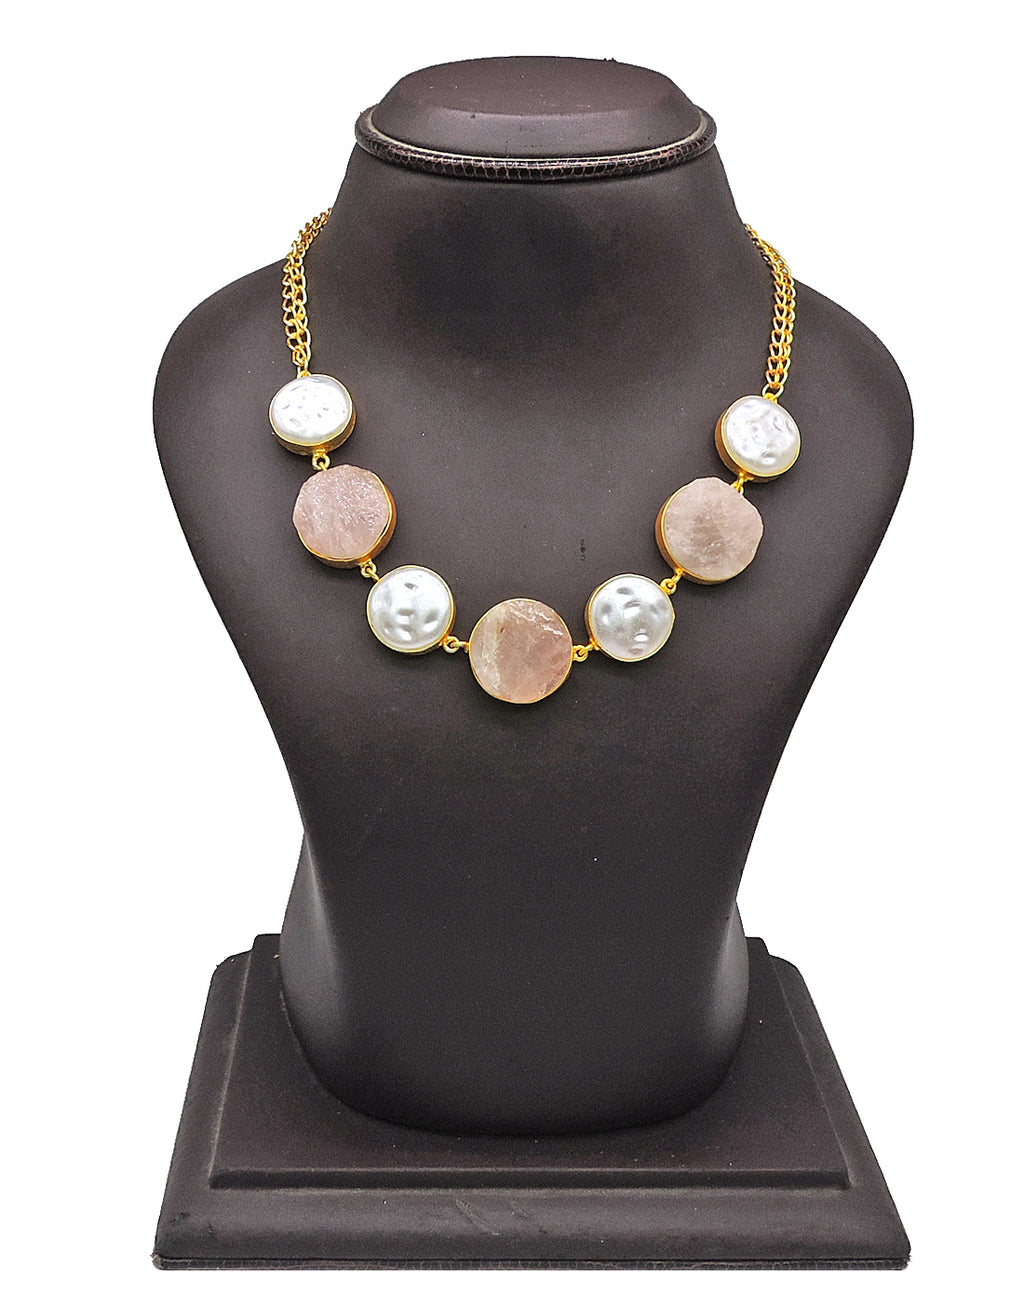 Rose Quartz & Baroque Pearl Necklace - Statement Necklaces - Gold-Plated & Hypoallergenic Jewellery - Made in India - Dubai Jewellery - Dori